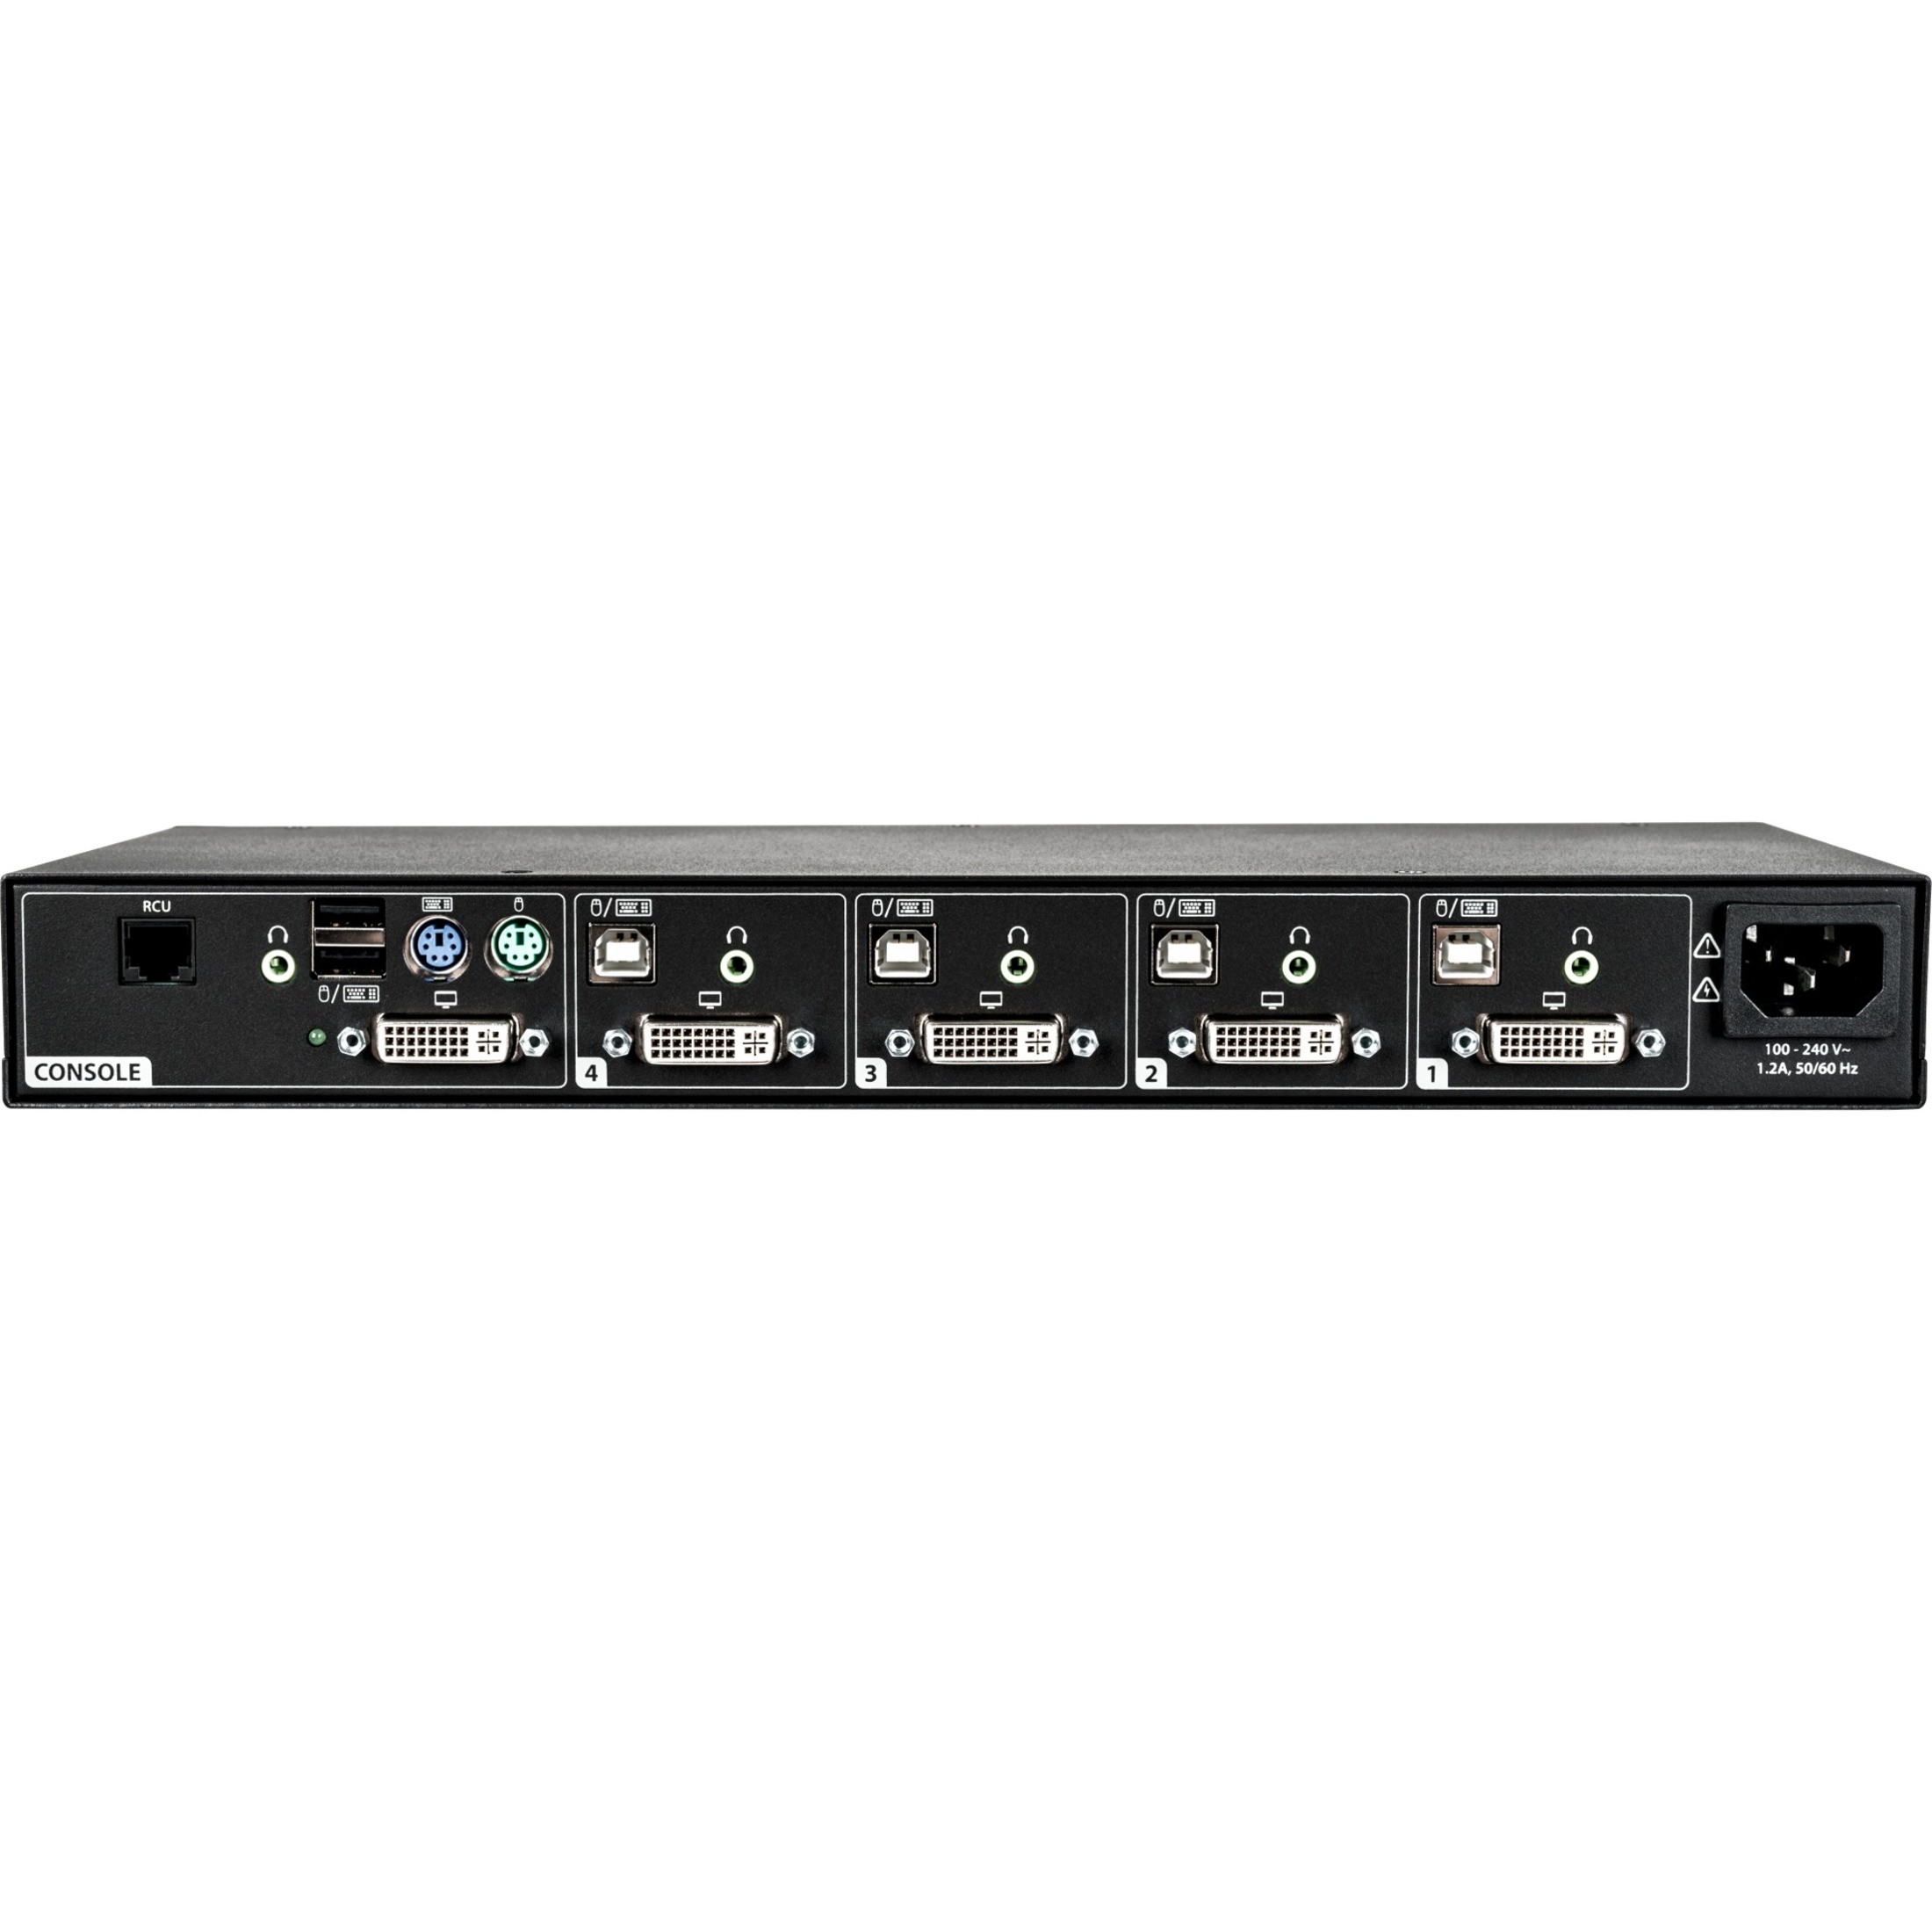 Vertiv Cybex SC840 Secure 4-Port KVM Switch, Single-Head DVI-I (dual-link)4 Computer1 Local User2560 x 16002 x PS/2 Port7… SC840-201